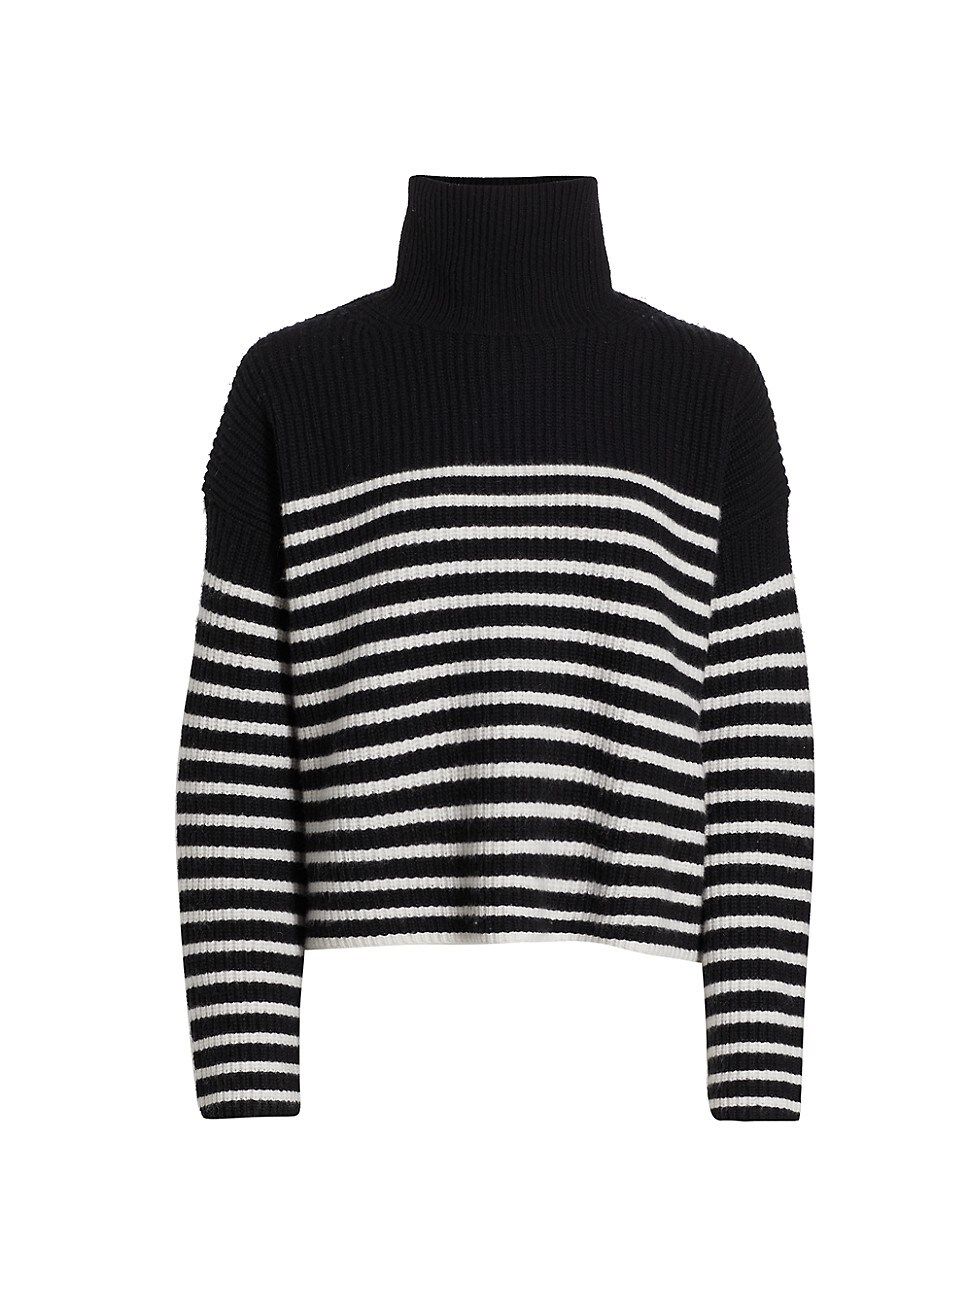 Women's Lusca Striped Turtleneck Sweater - Black Neutral White - Size XL | Saks Fifth Avenue